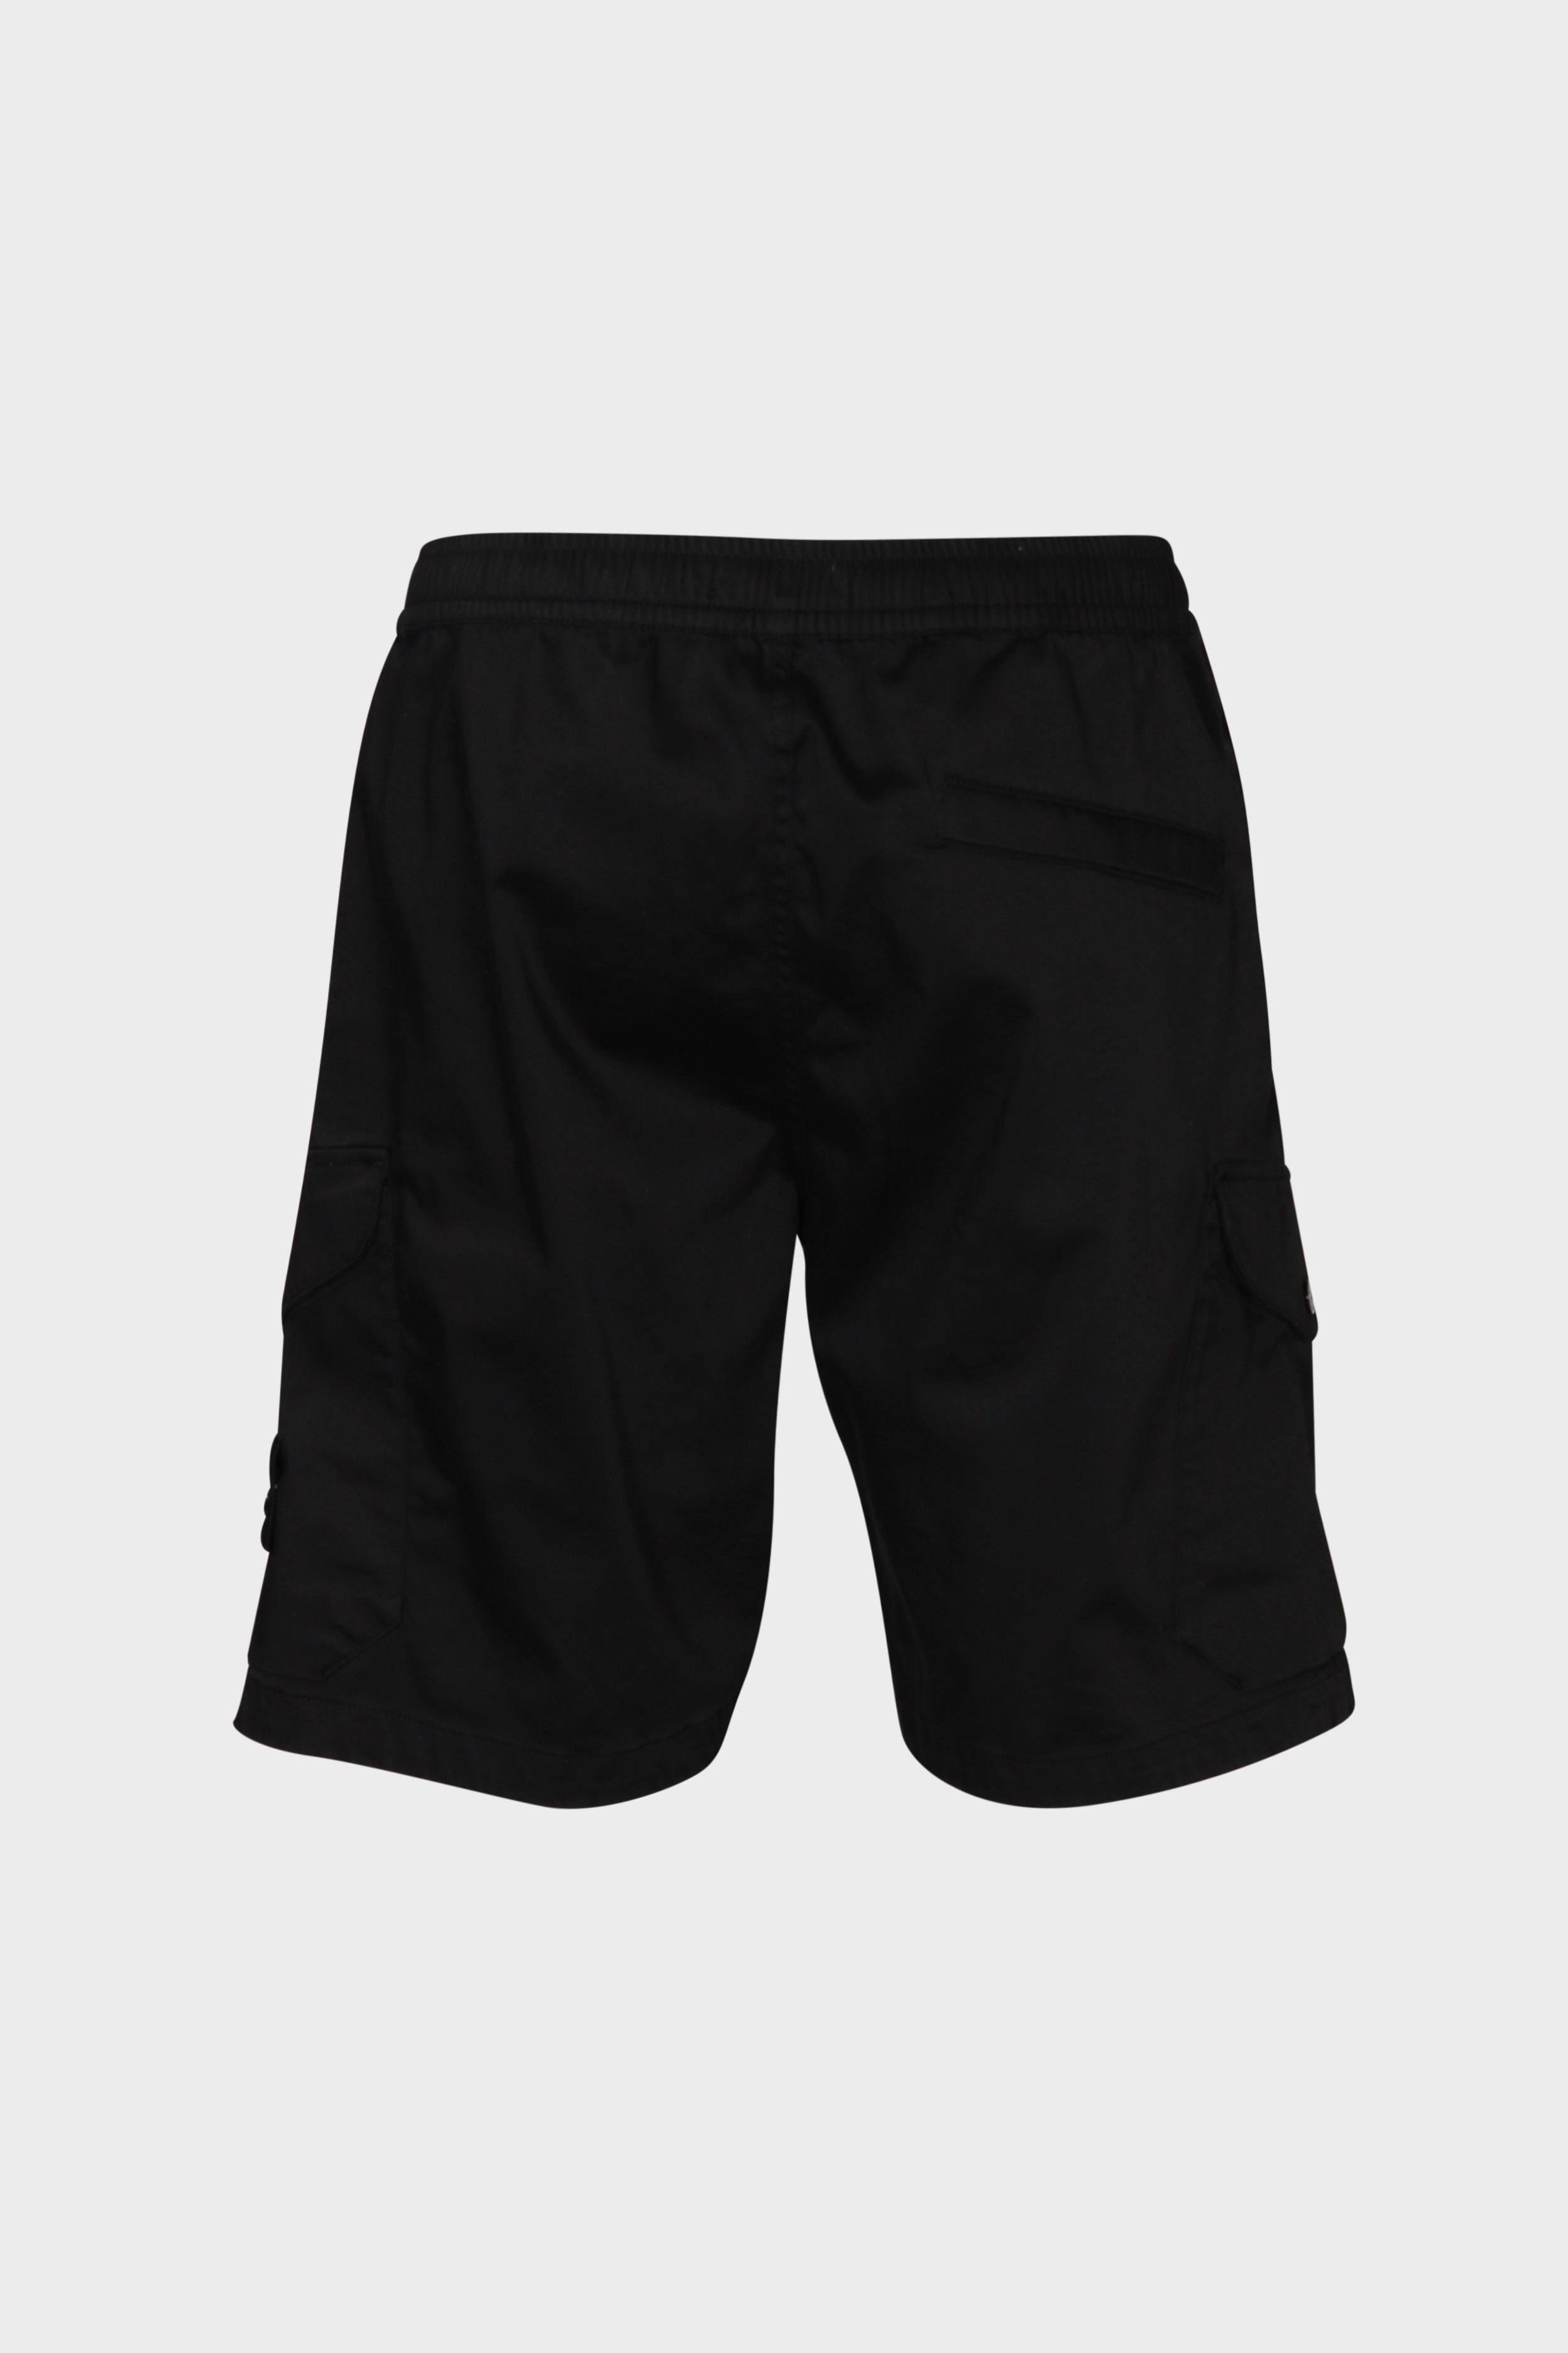 STONE ISLAND Bermuda Shorts in Black